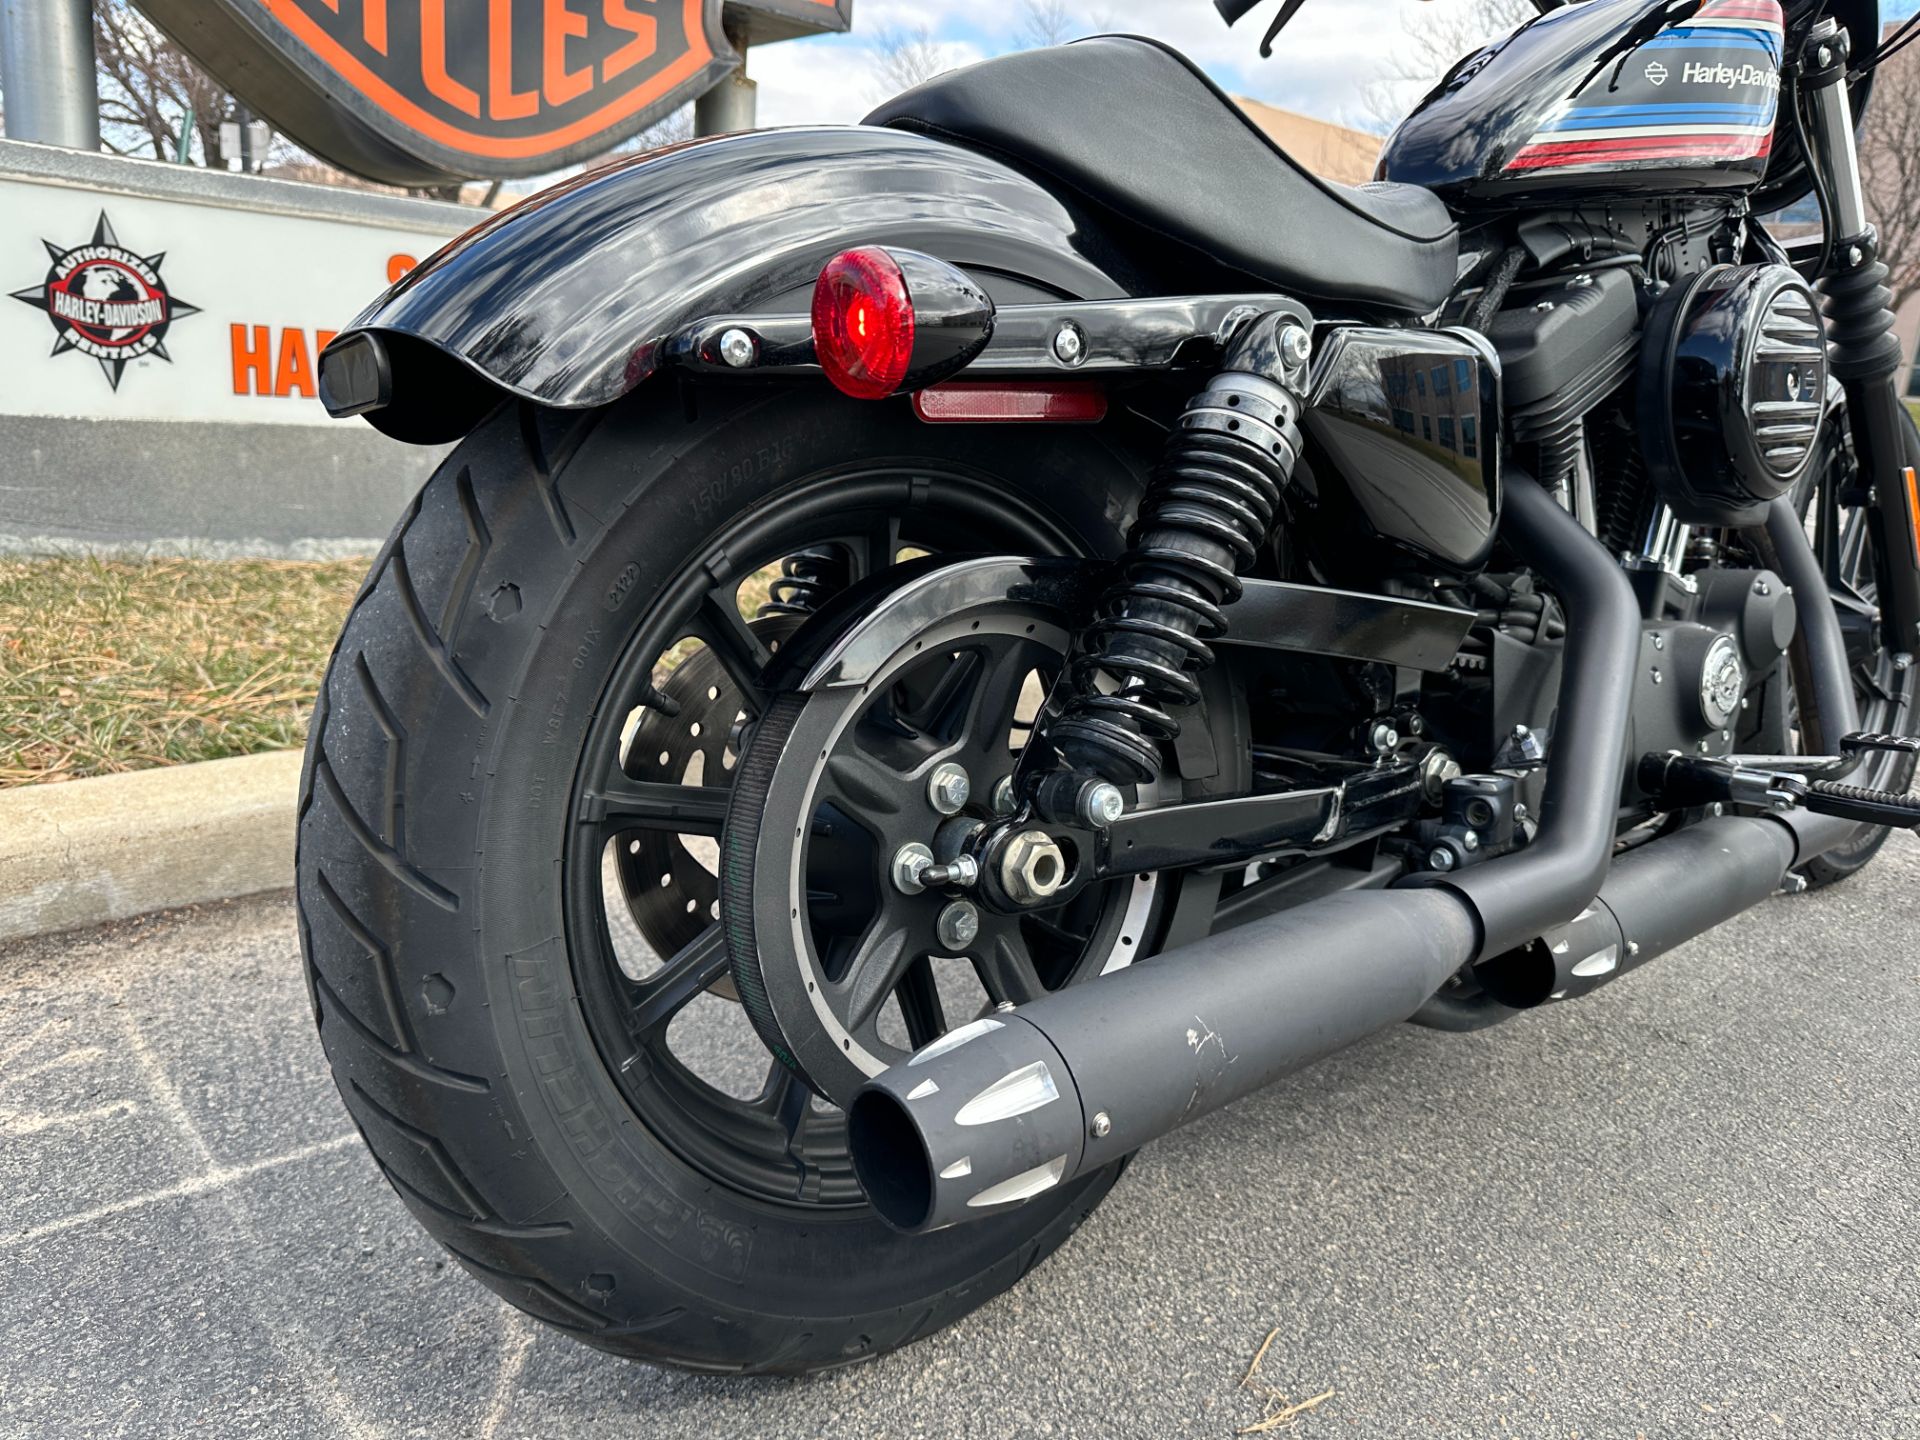 2020 Harley-Davidson Iron 1200™ in Sandy, Utah - Photo 16